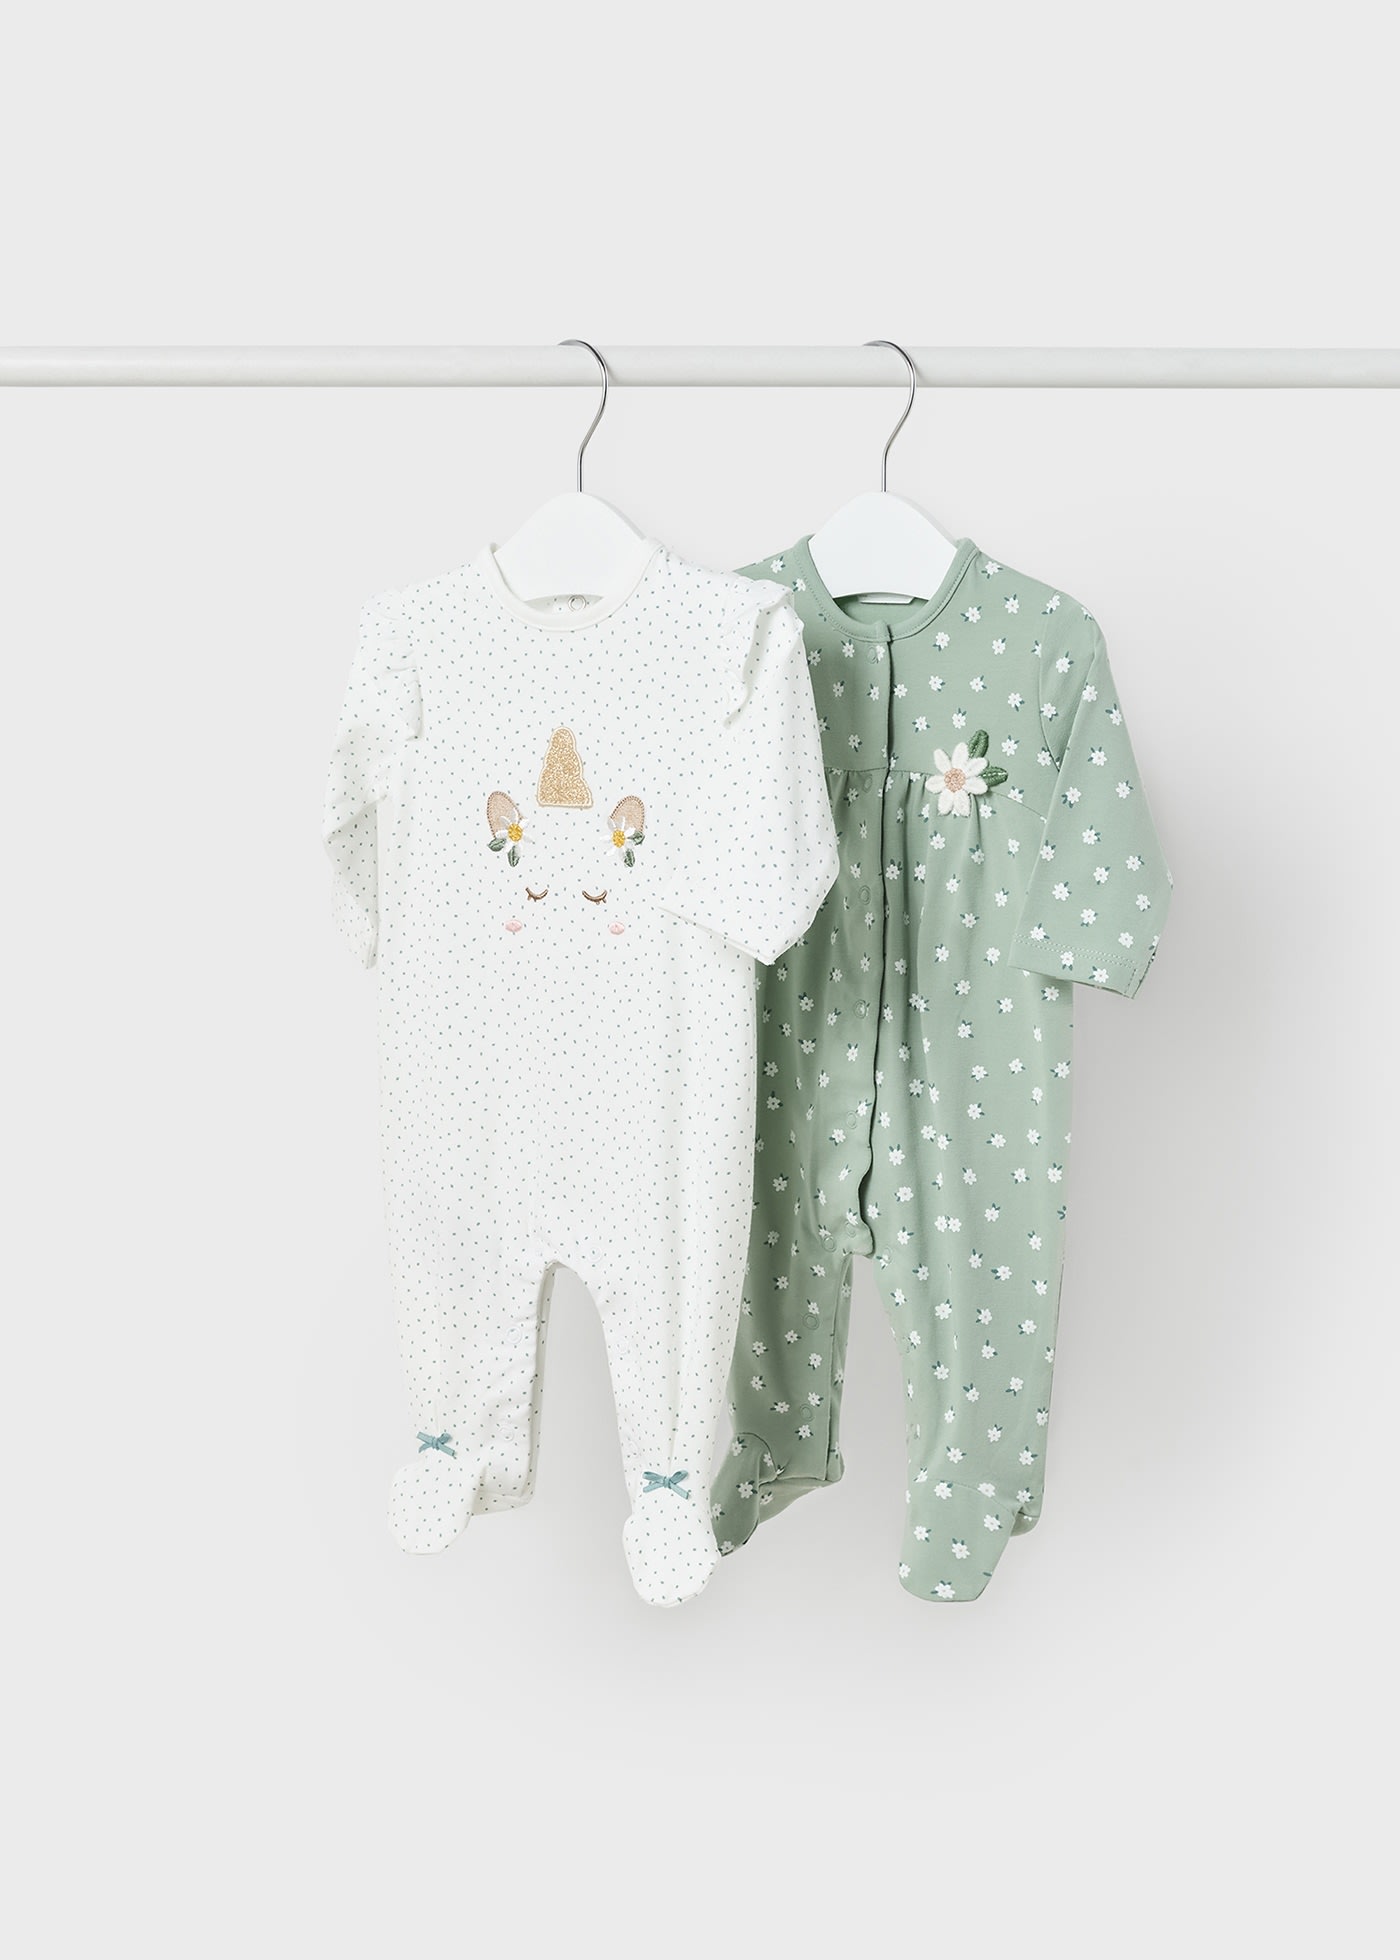 Pijama para bebés de algodón peruano - estampado huevos